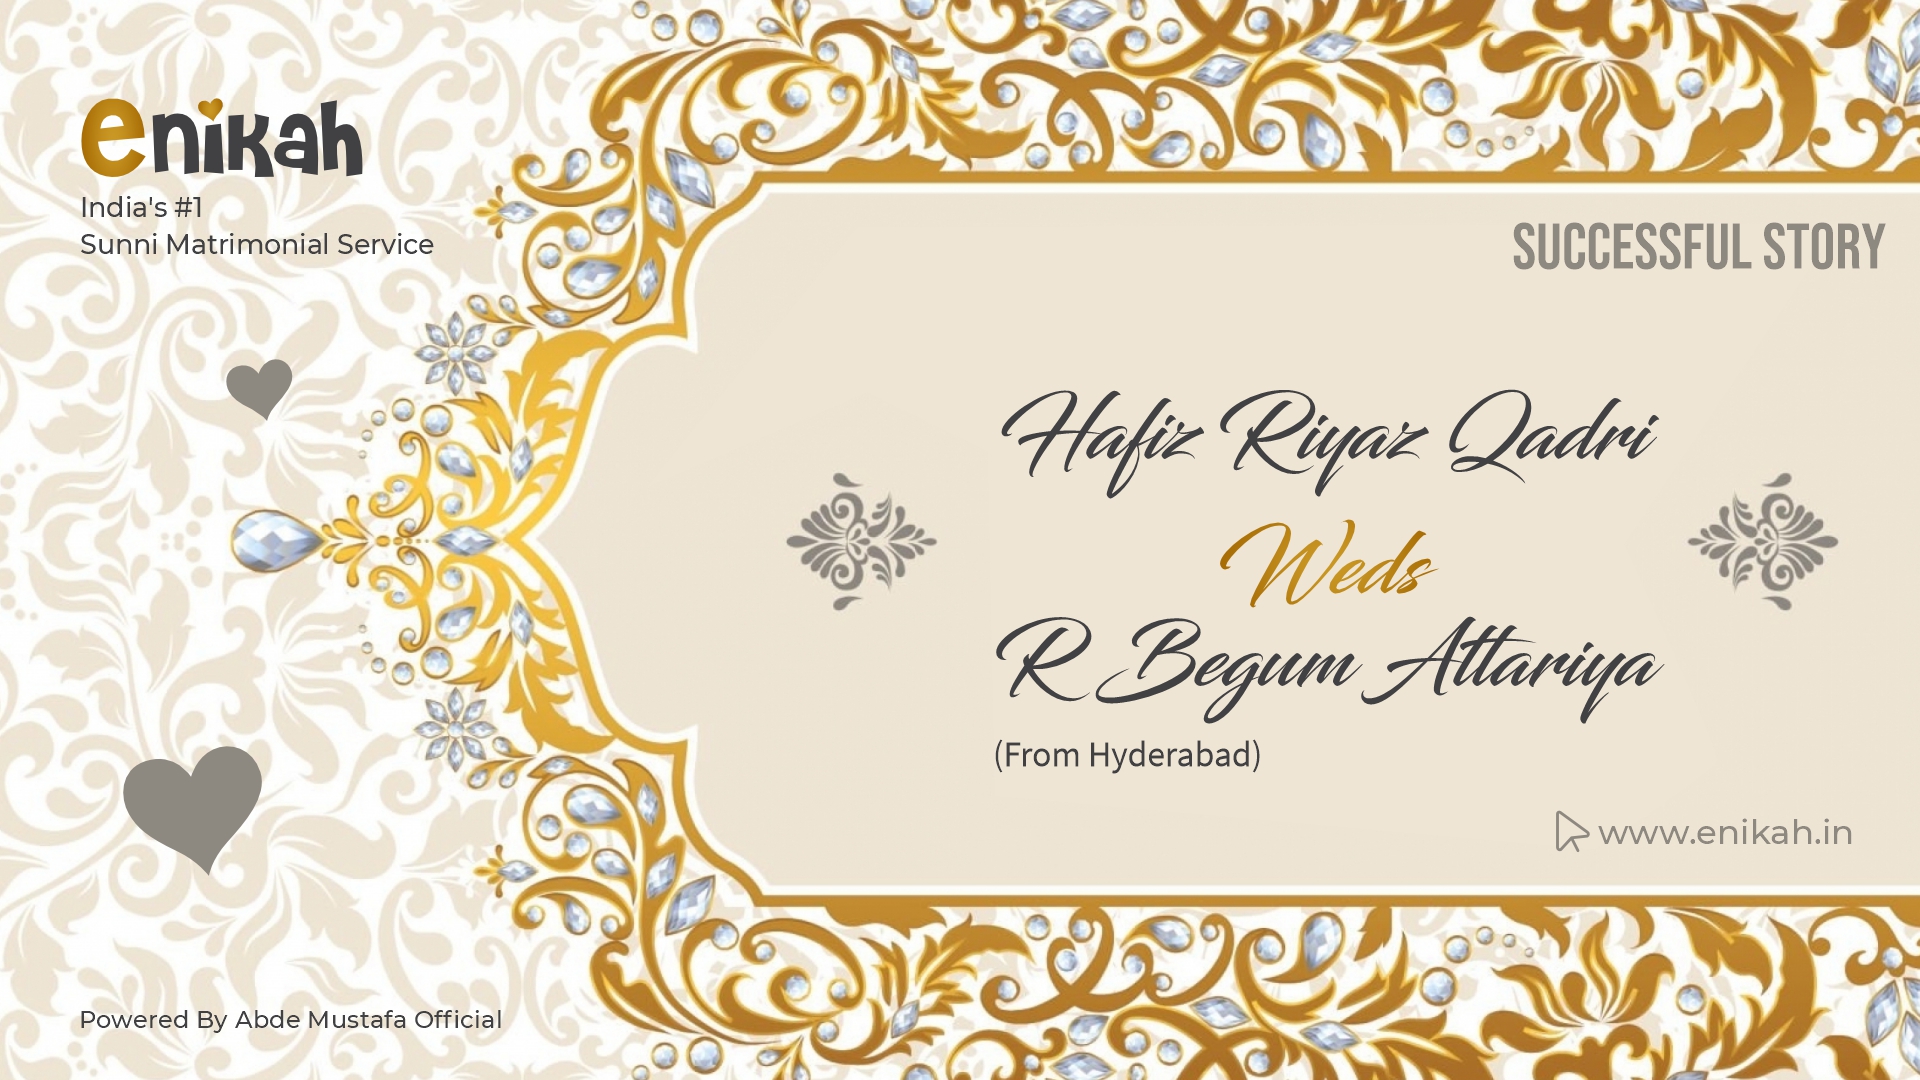 Hafiz Riyaz Qadri Weds R Begum Attariya